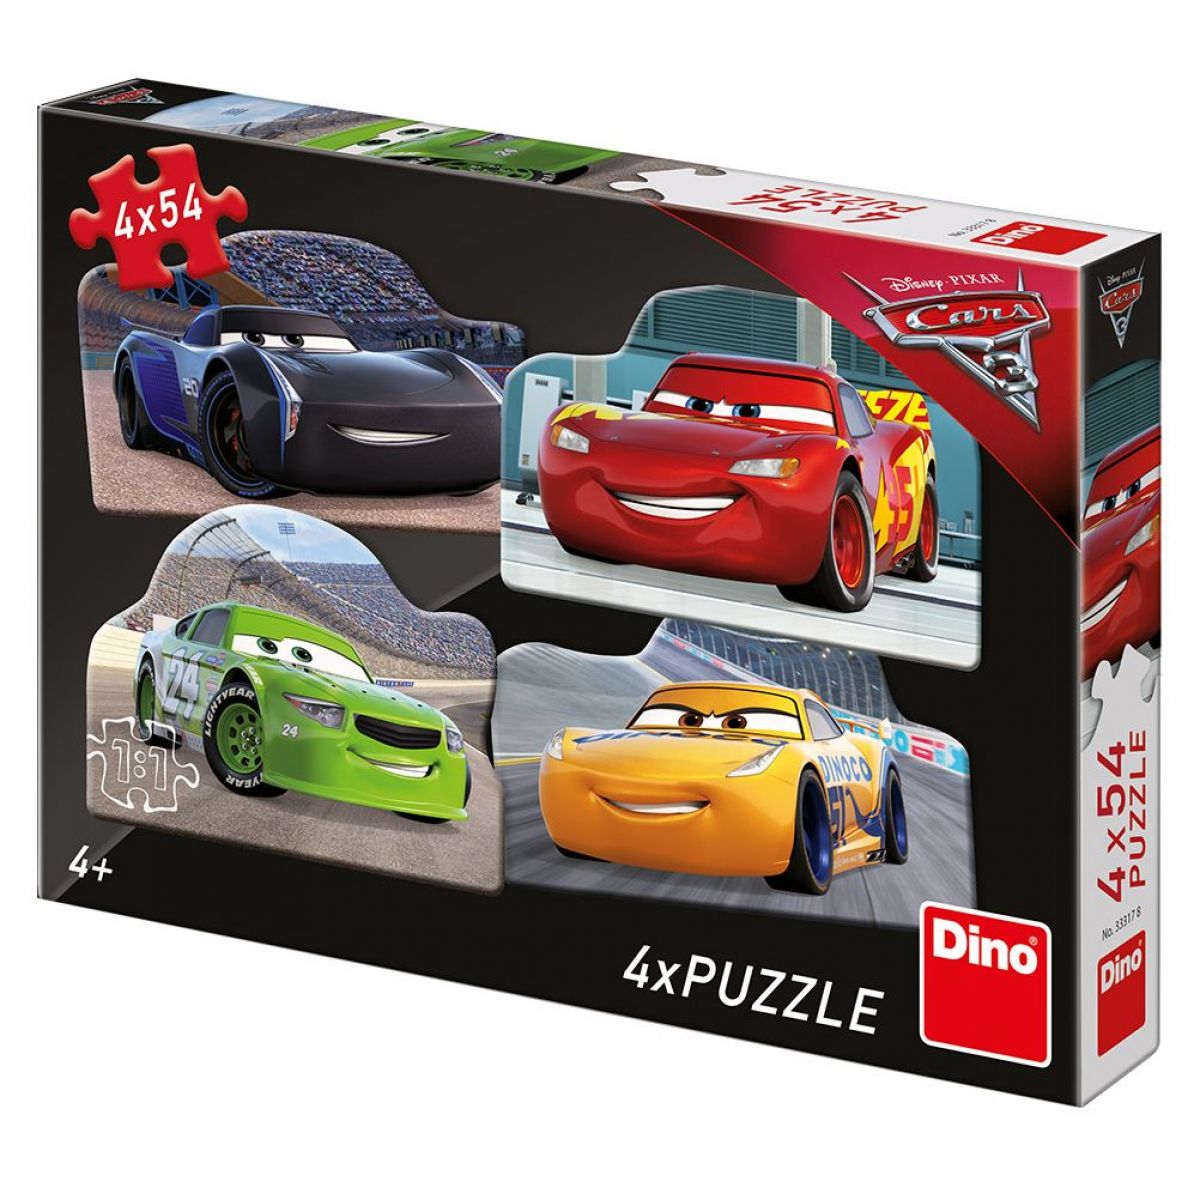 Dino Disney Cars 3 Rivalové puzzle 4 x 54 dílků